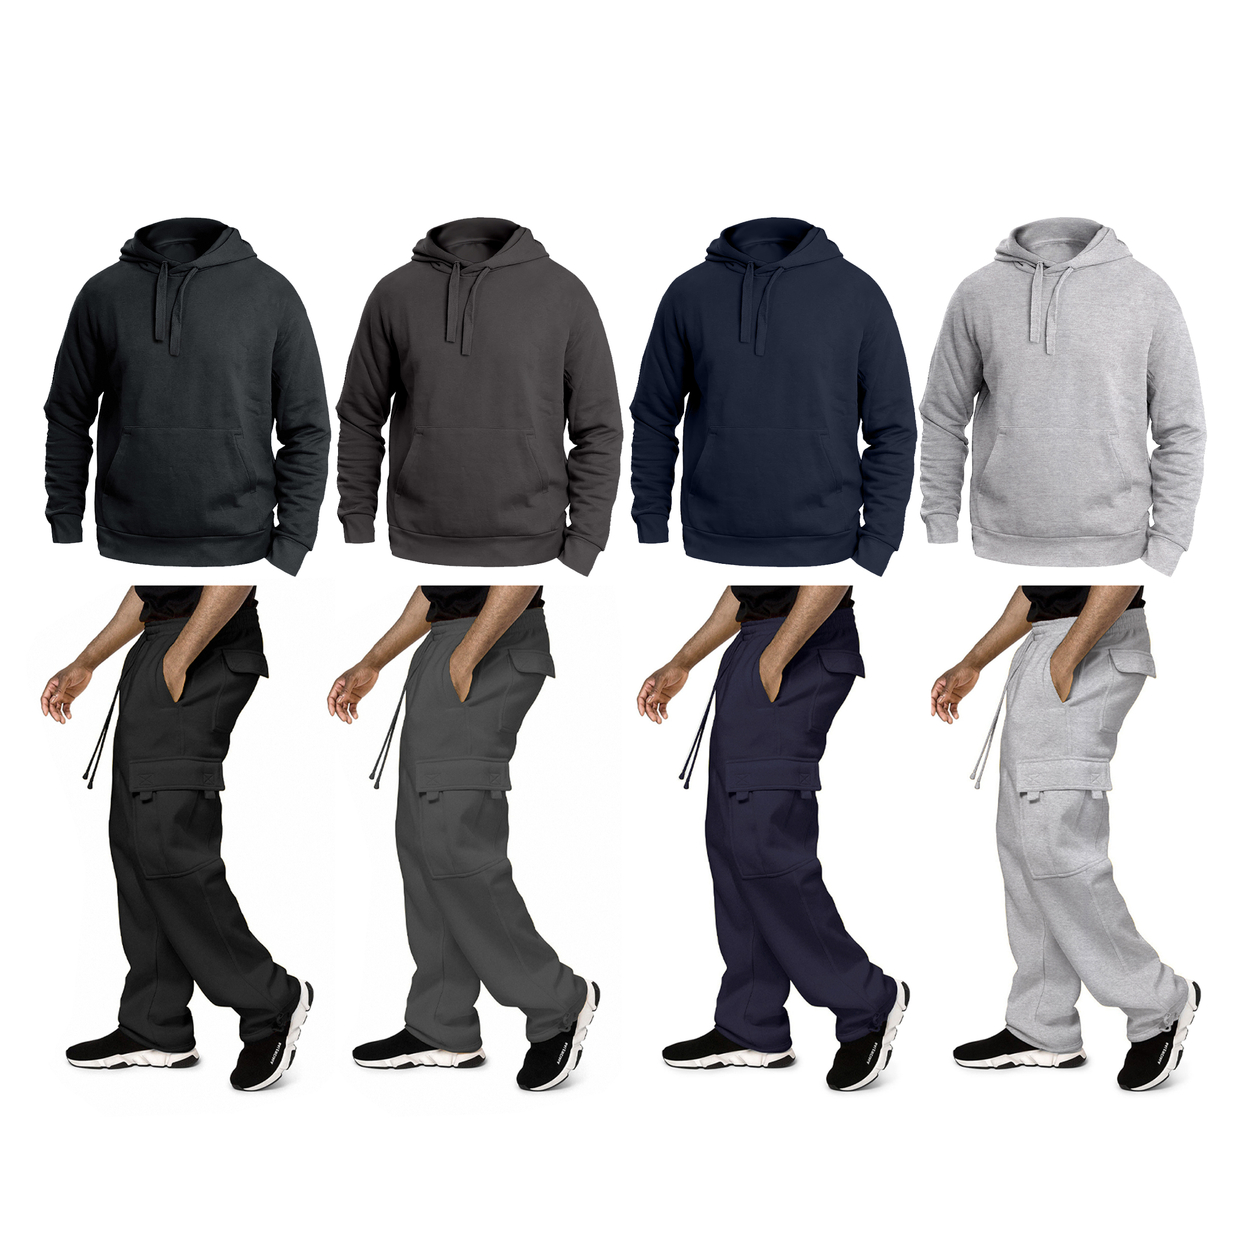 Men's Big & Tall Winter Warm Cozy Athletic Fleece Lined Multi-Pocket Cargo Sweatsuit - Charcoal, X-large